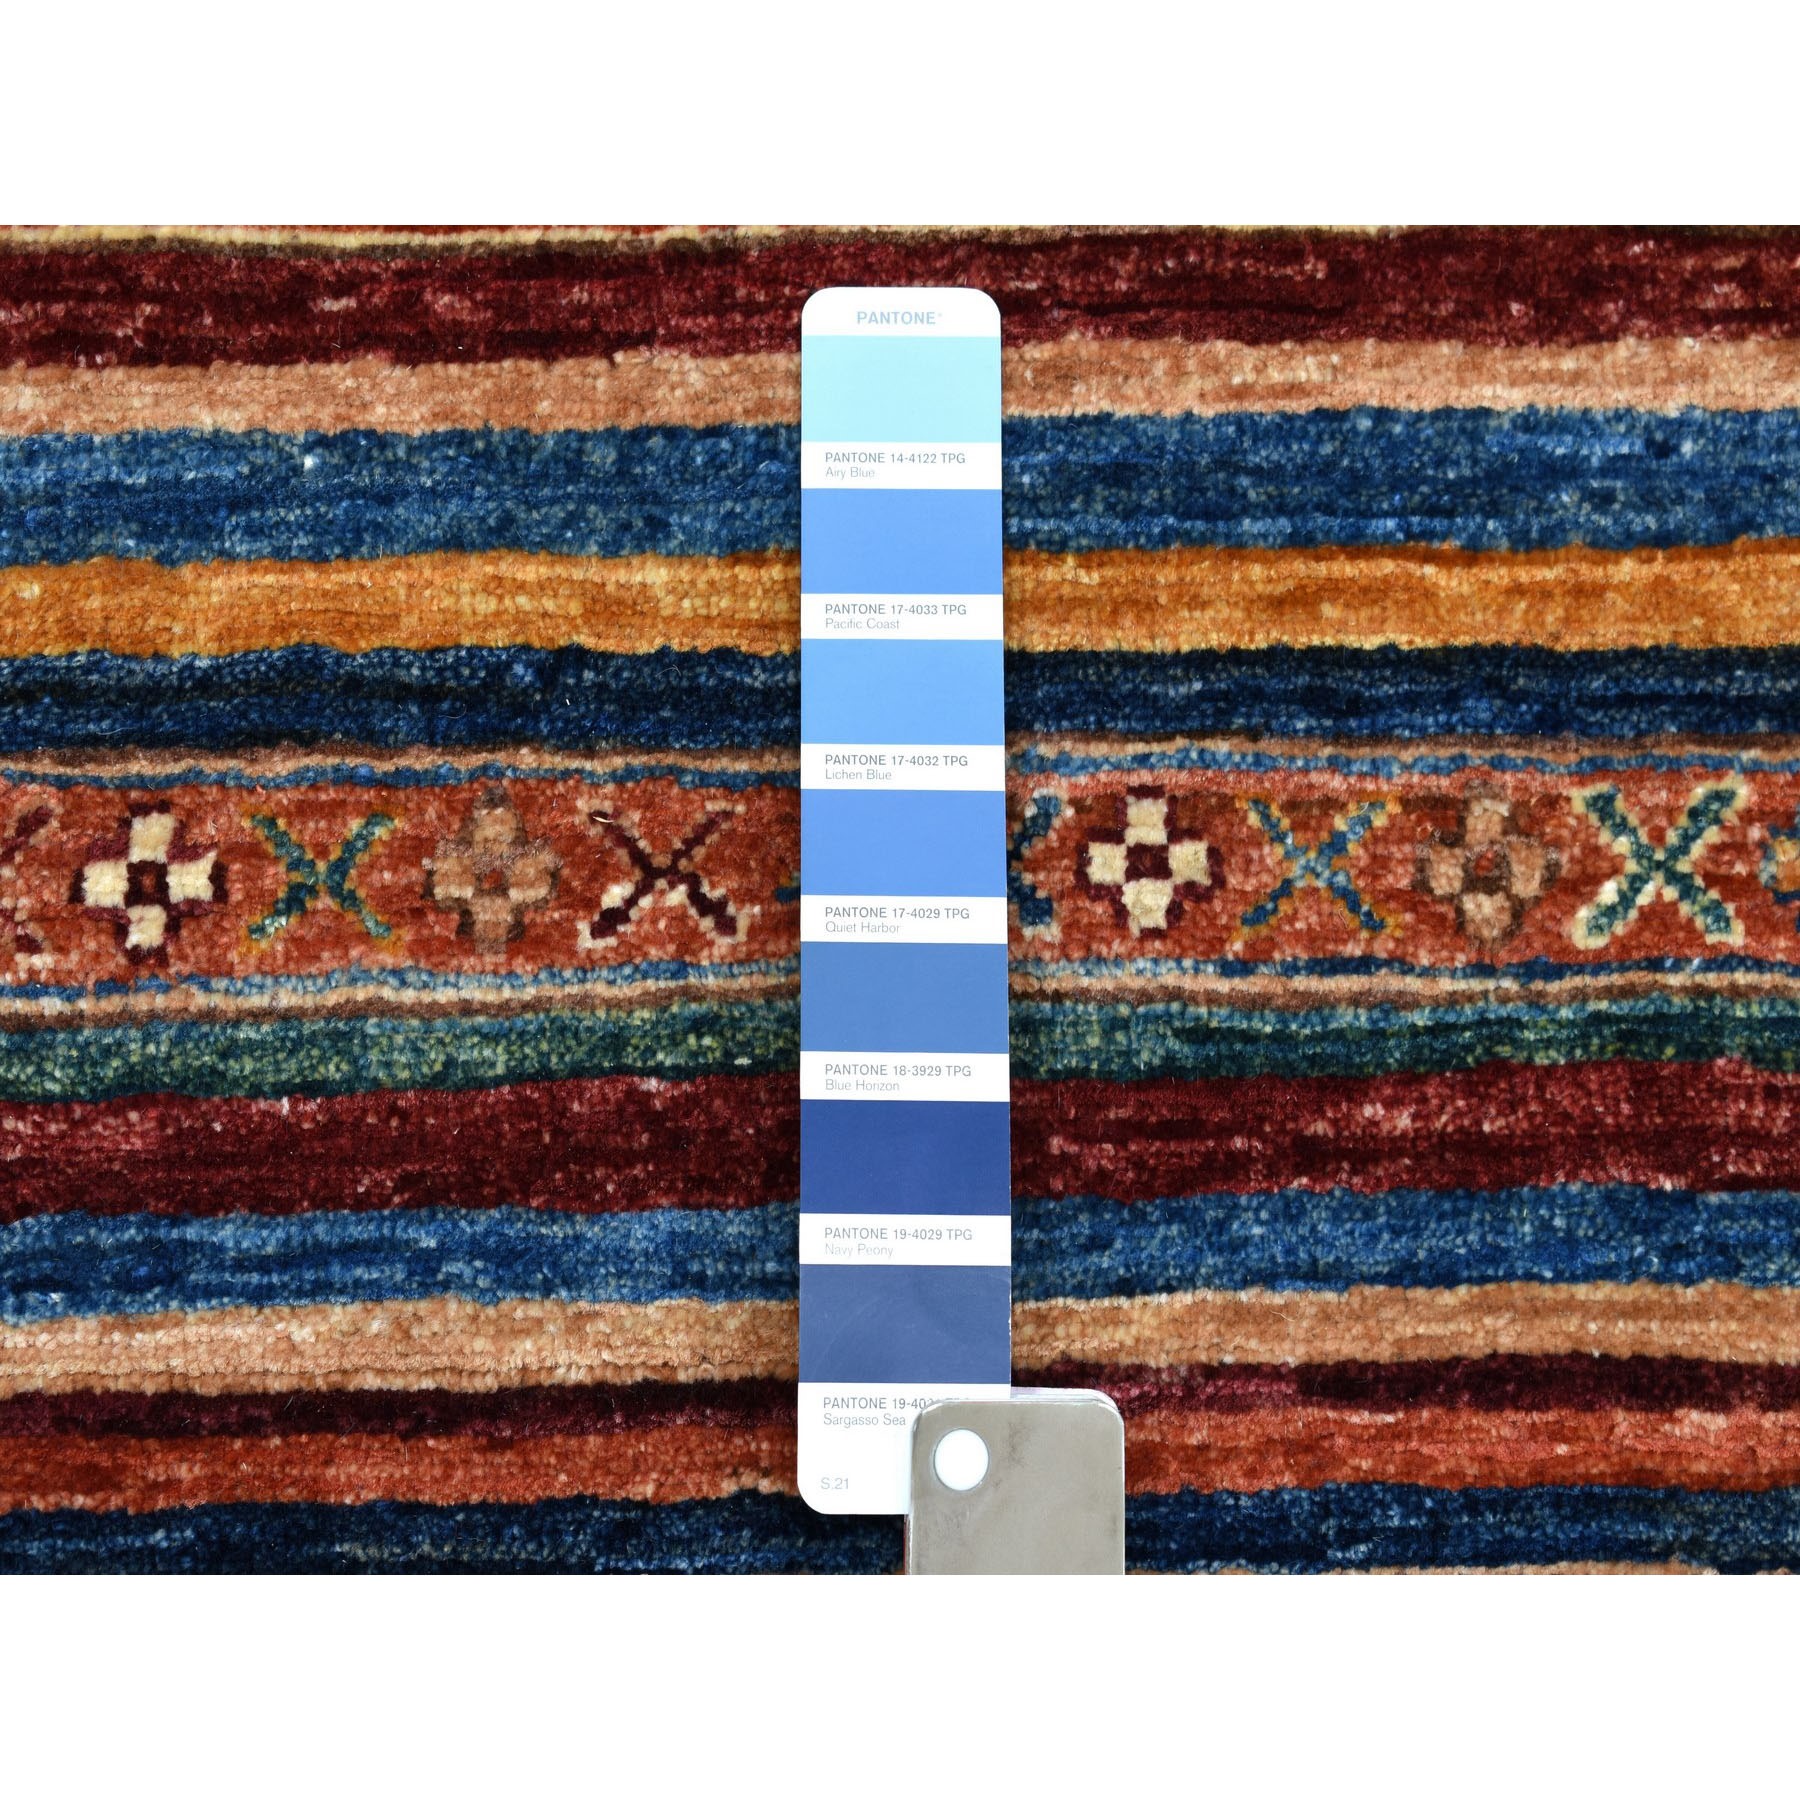 2-2 x10-2  Blue Khorjin Design Runner Super Kazak Geometric Pure Wool Hand Knotted Oriental Rug 